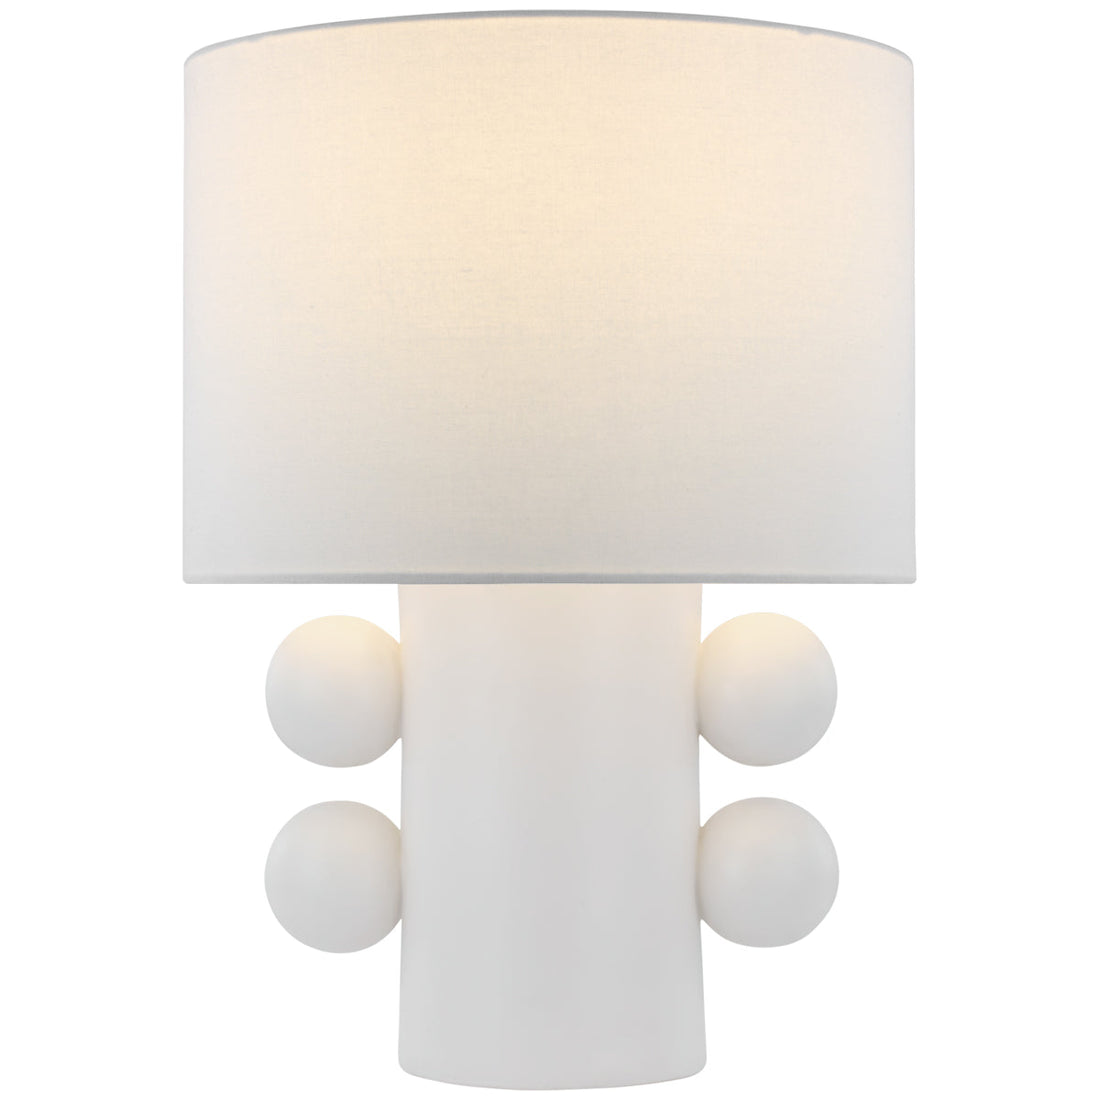 Visual Comfort Tiglia Low Table Lamp